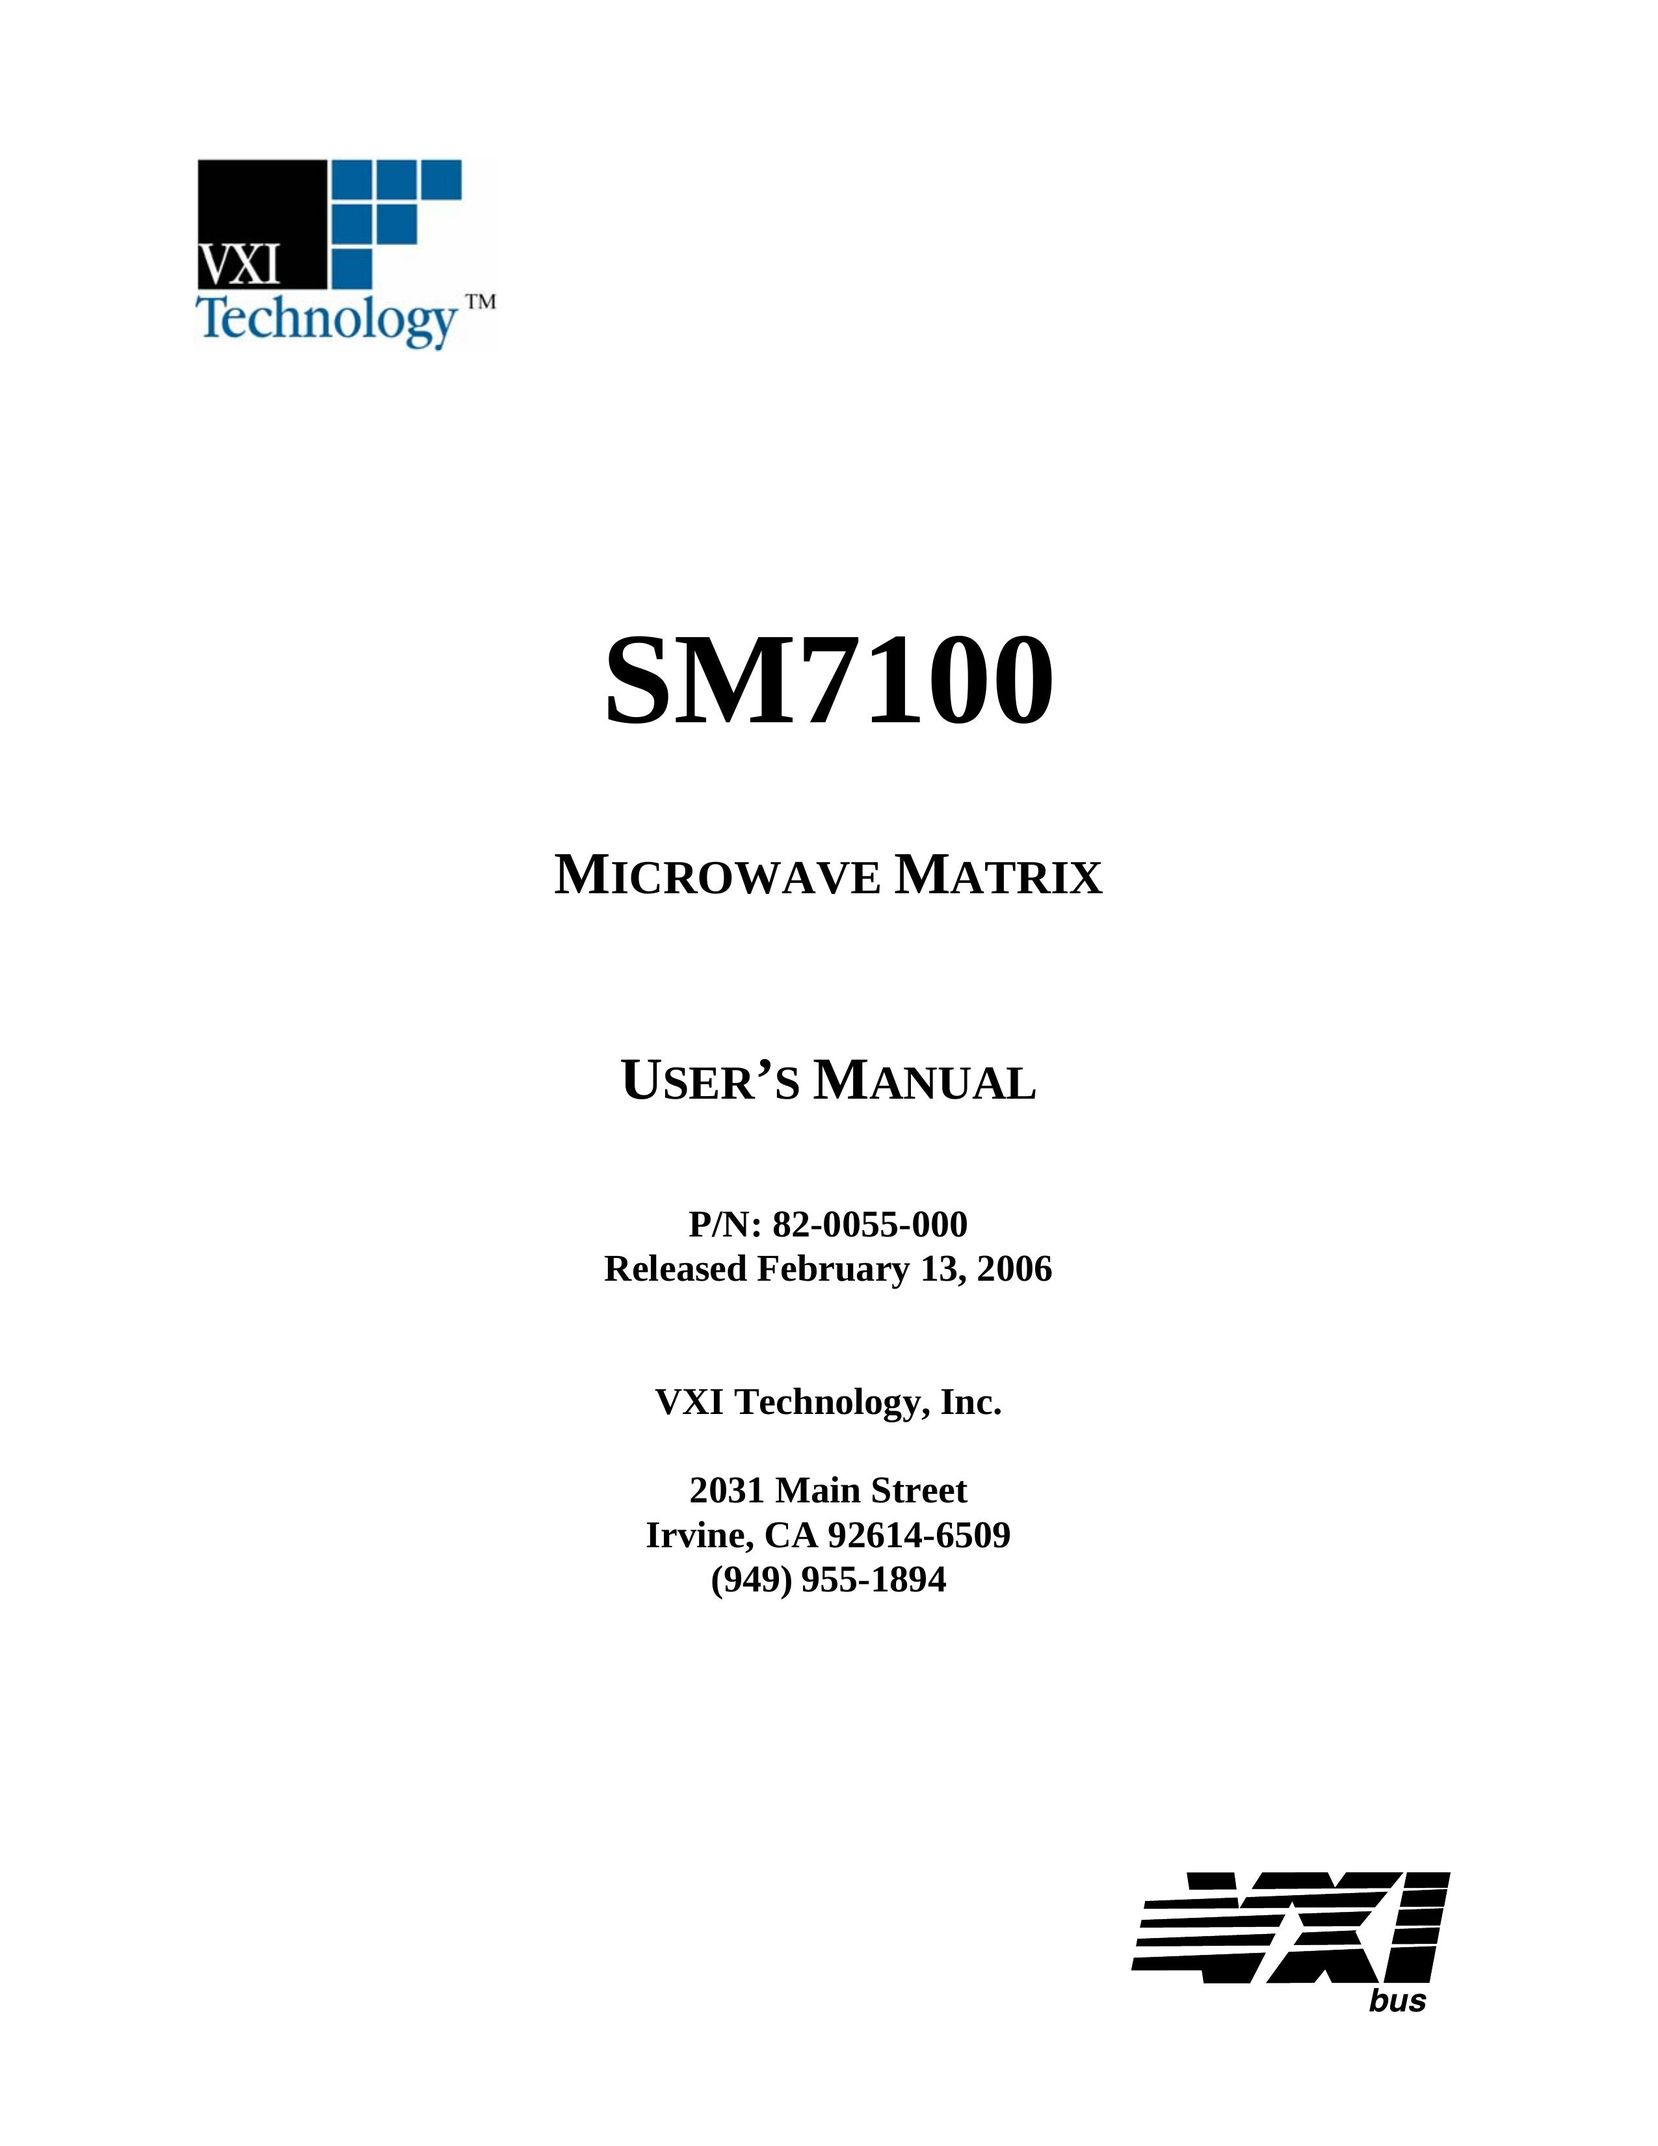 VXI SM7100 Microwave Oven User Manual